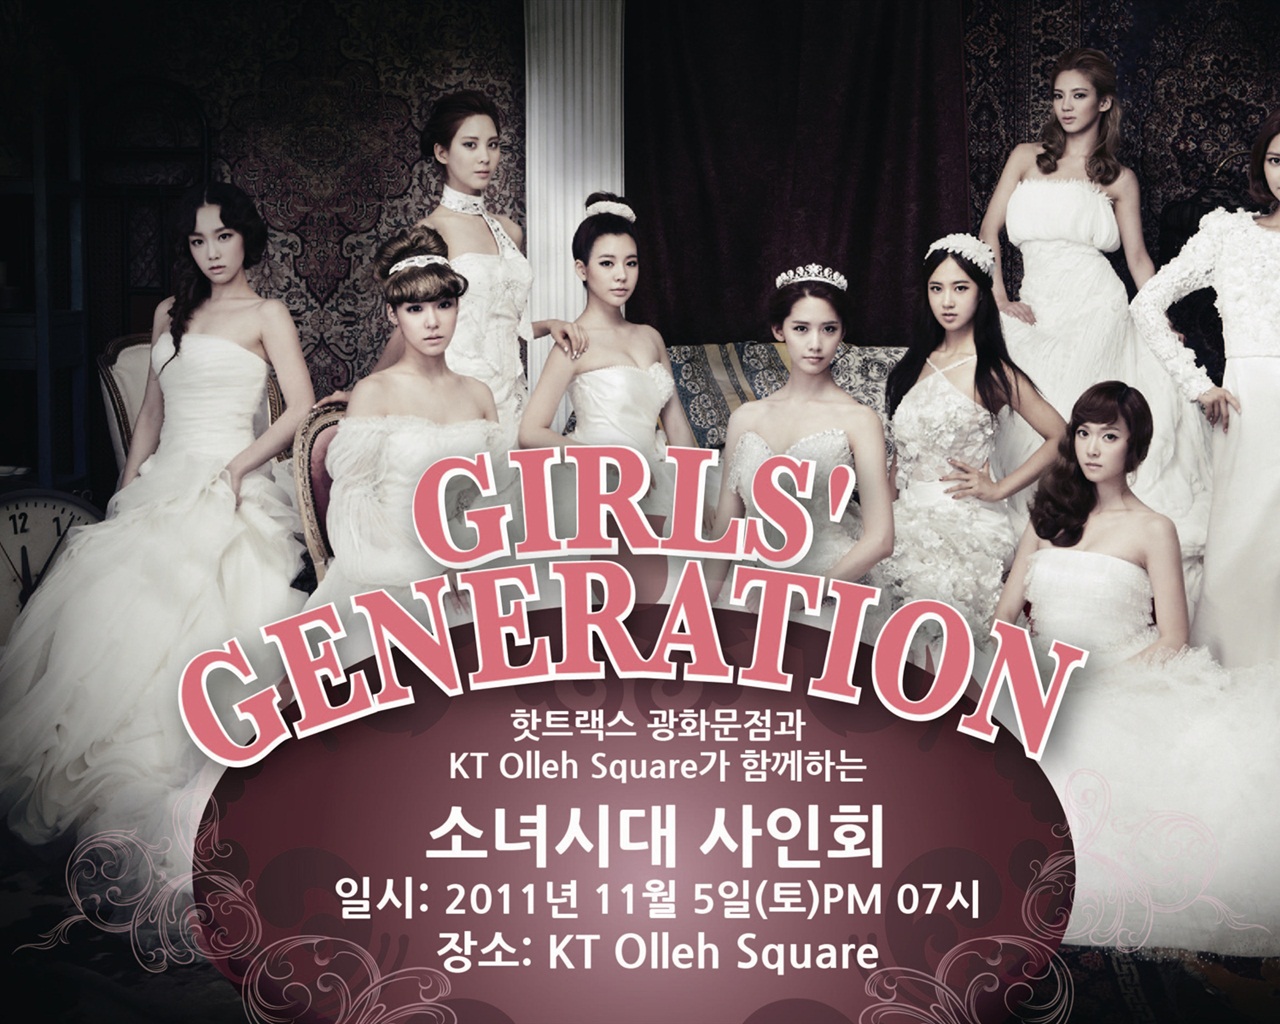 Generation Girls HD wallpapers dernière collection #8 - 1280x1024